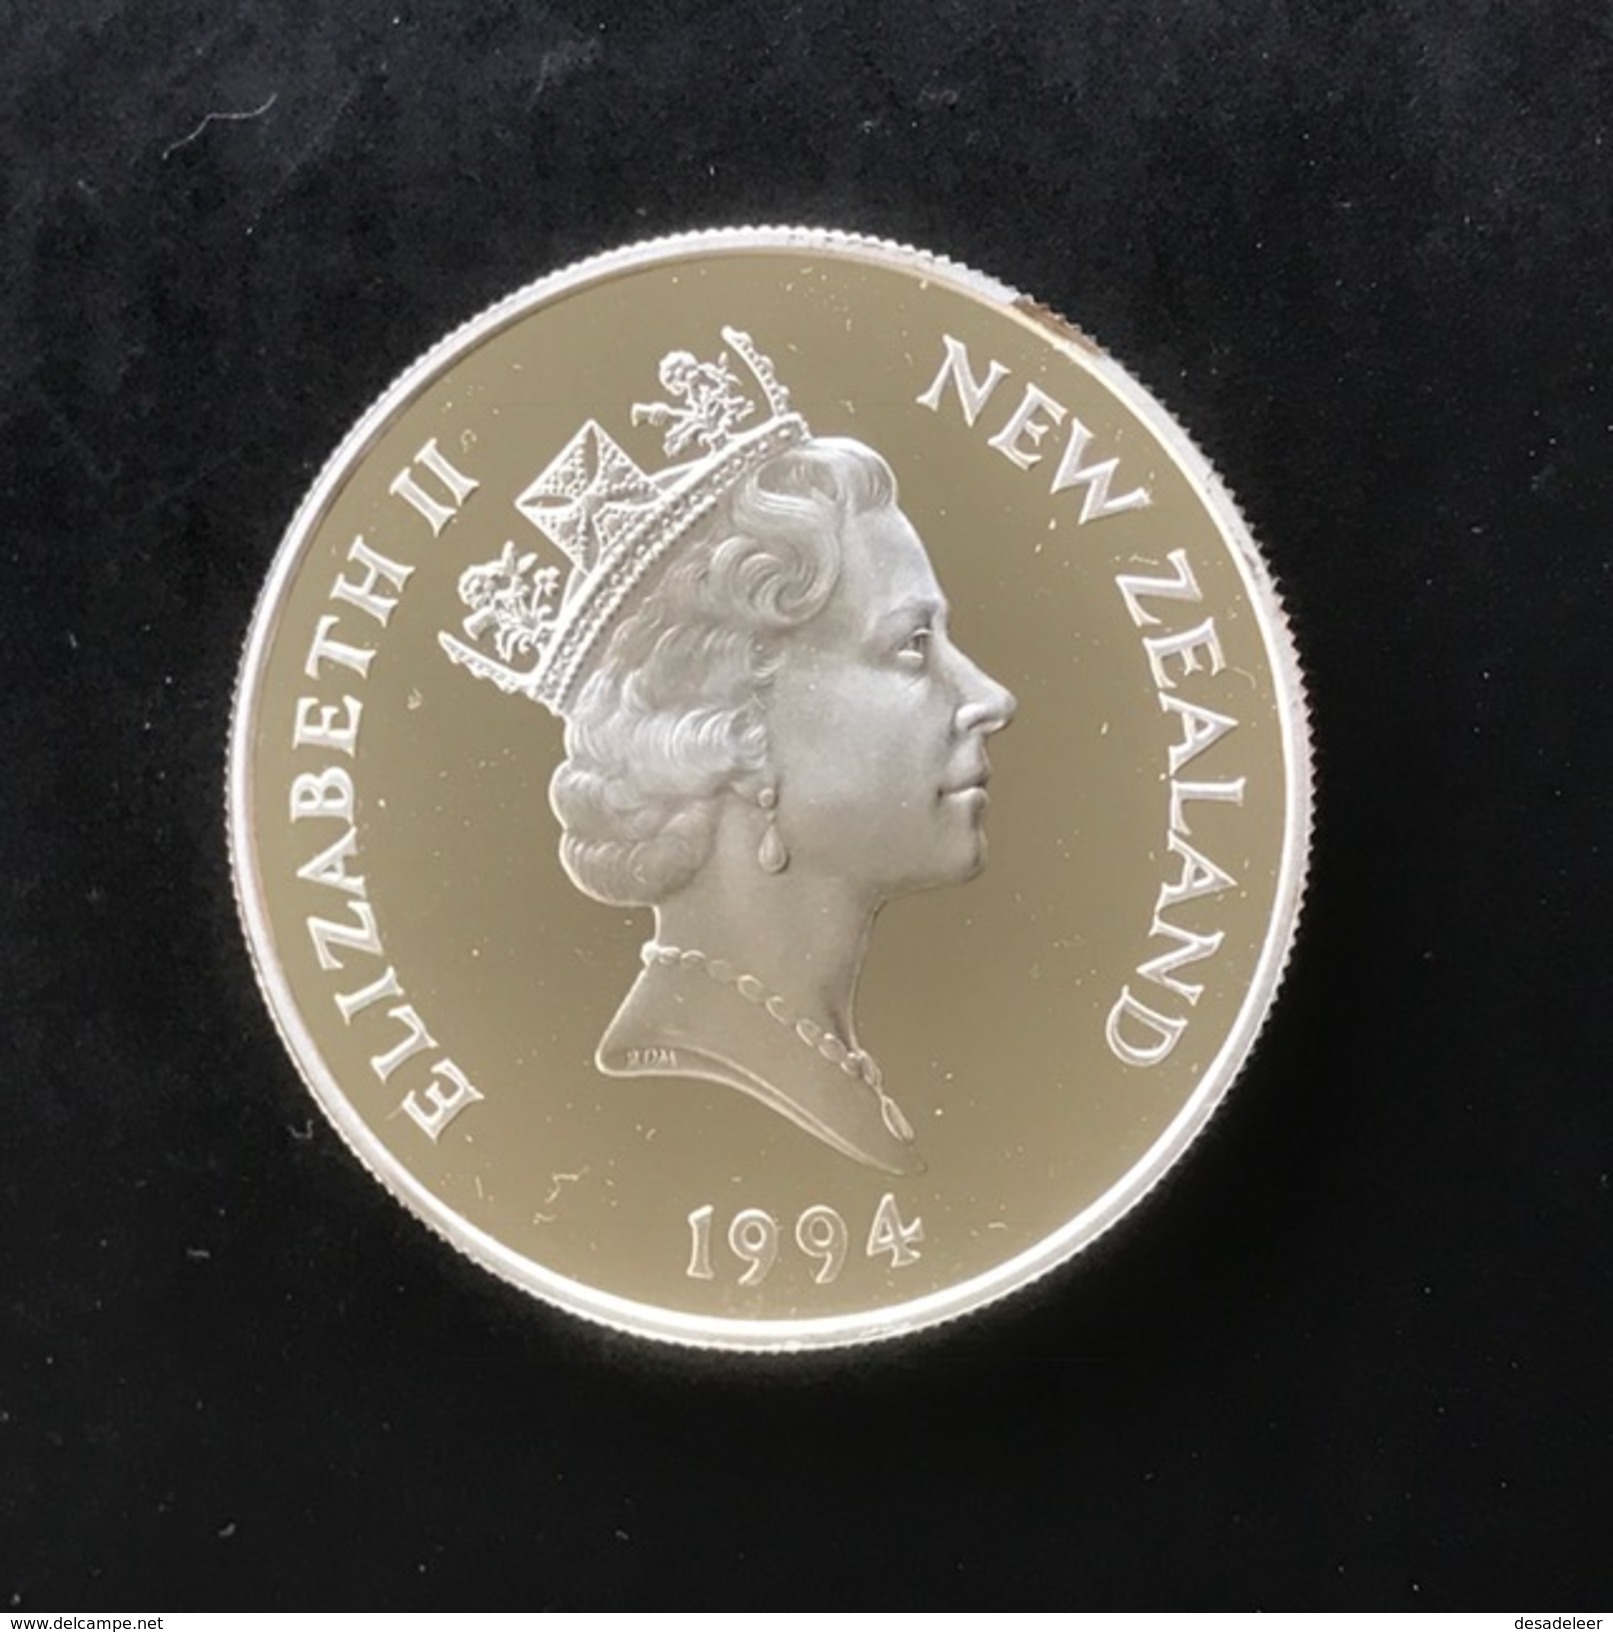 New Zealand 5 Dollar 1994 (Proof) - Winter Olympics - Neuseeland